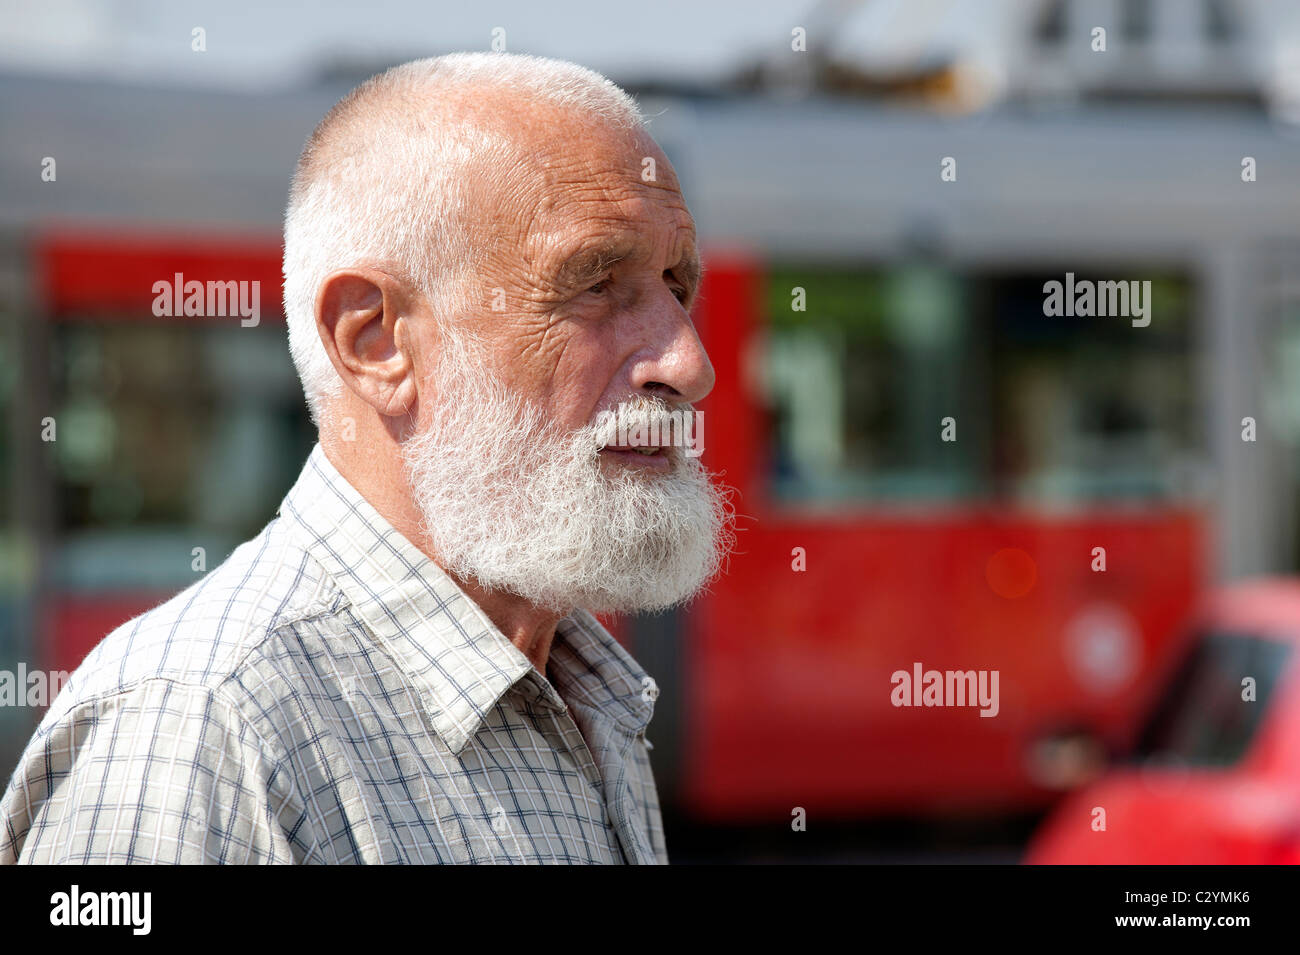 A portrait of older sun tan man with gray beard Stock Photo